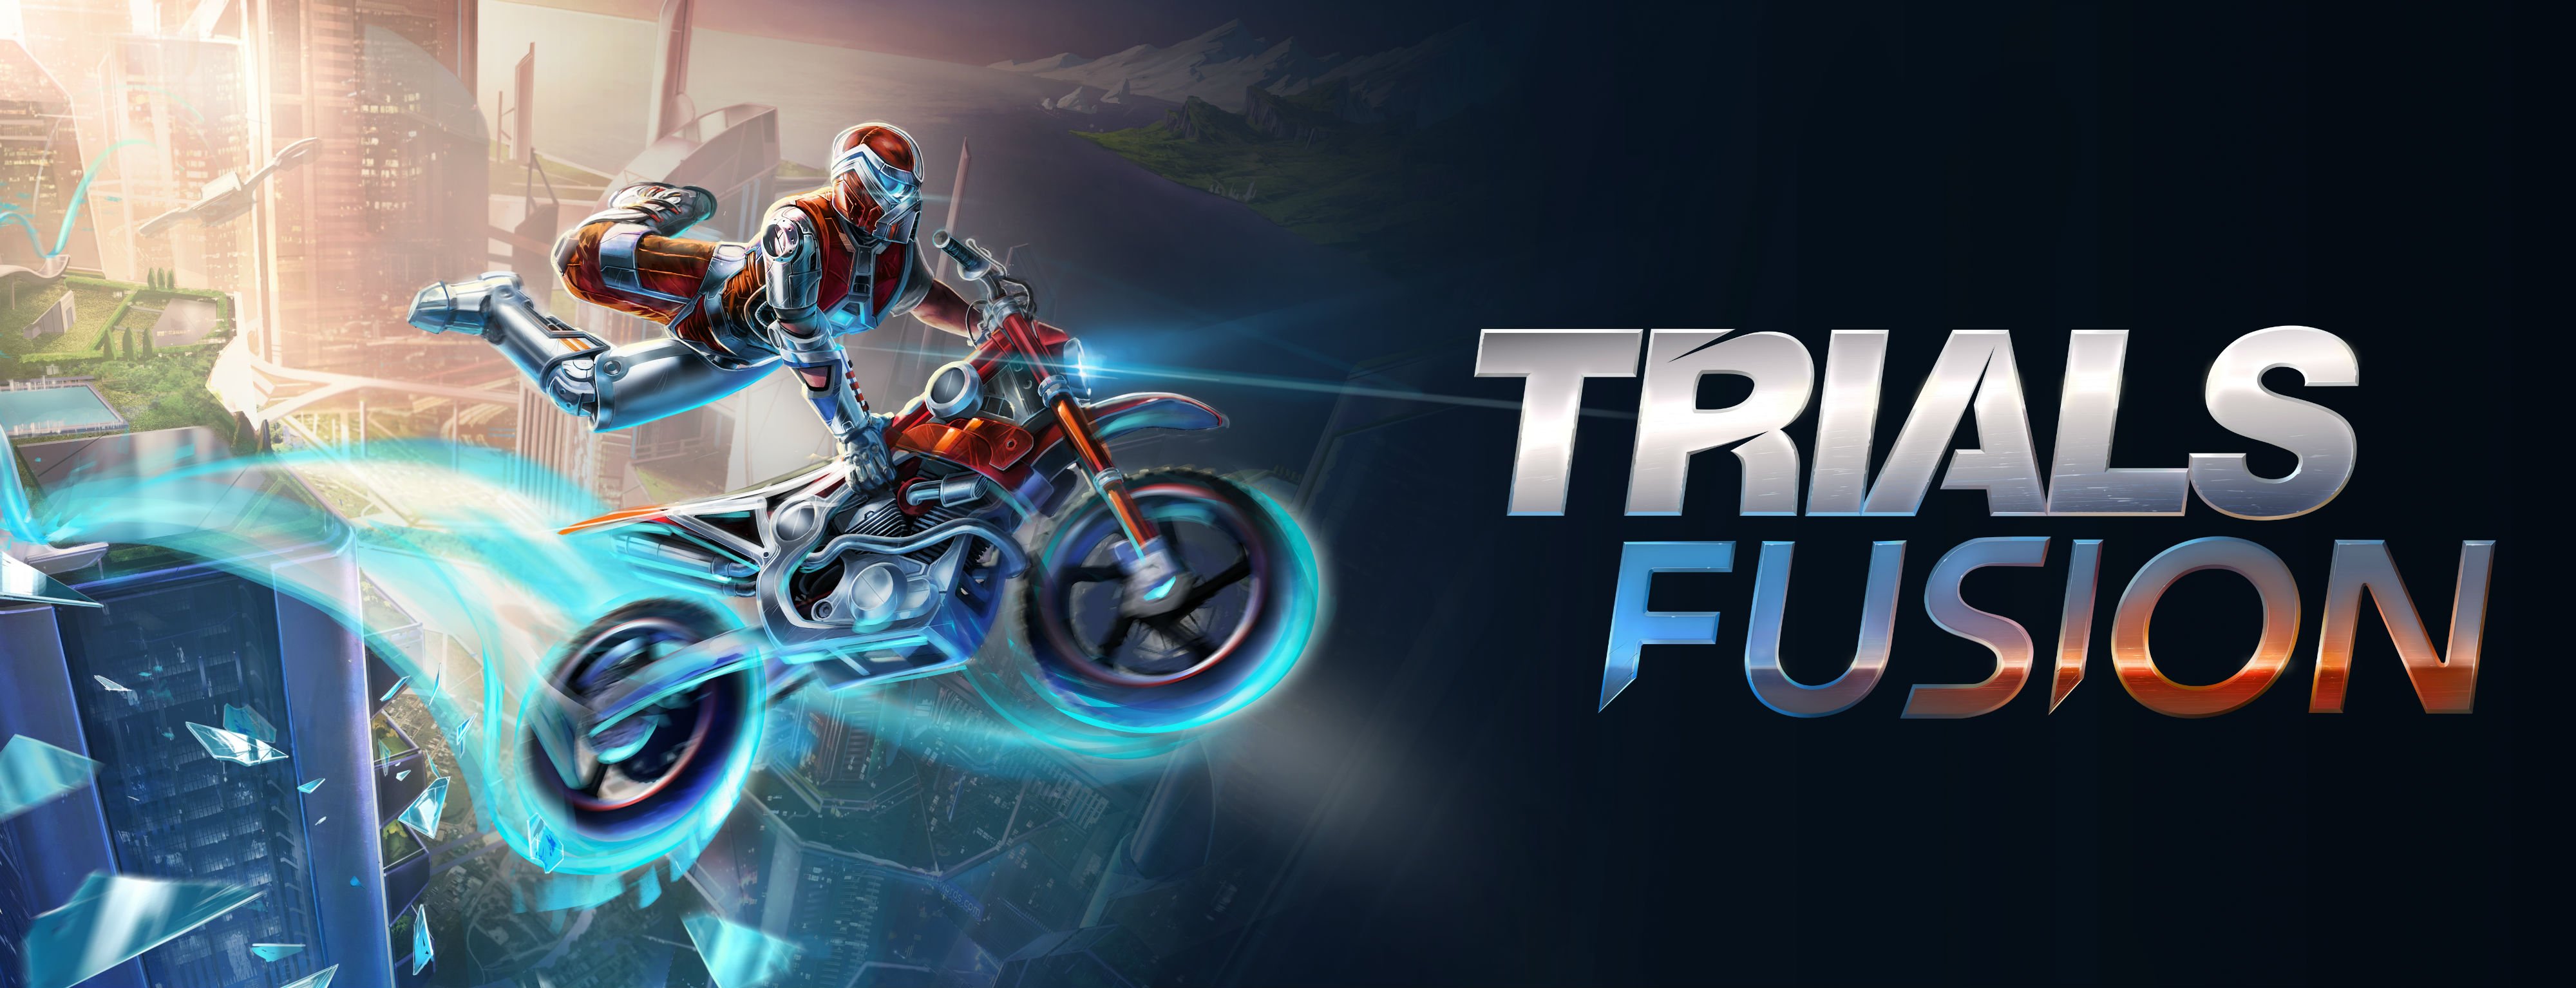 trials, Fusion, Trials, Motorbike, Bike, Sci fi, Motorcycle, Moto, Motocross, Dirtbike, Poster Wallpaper